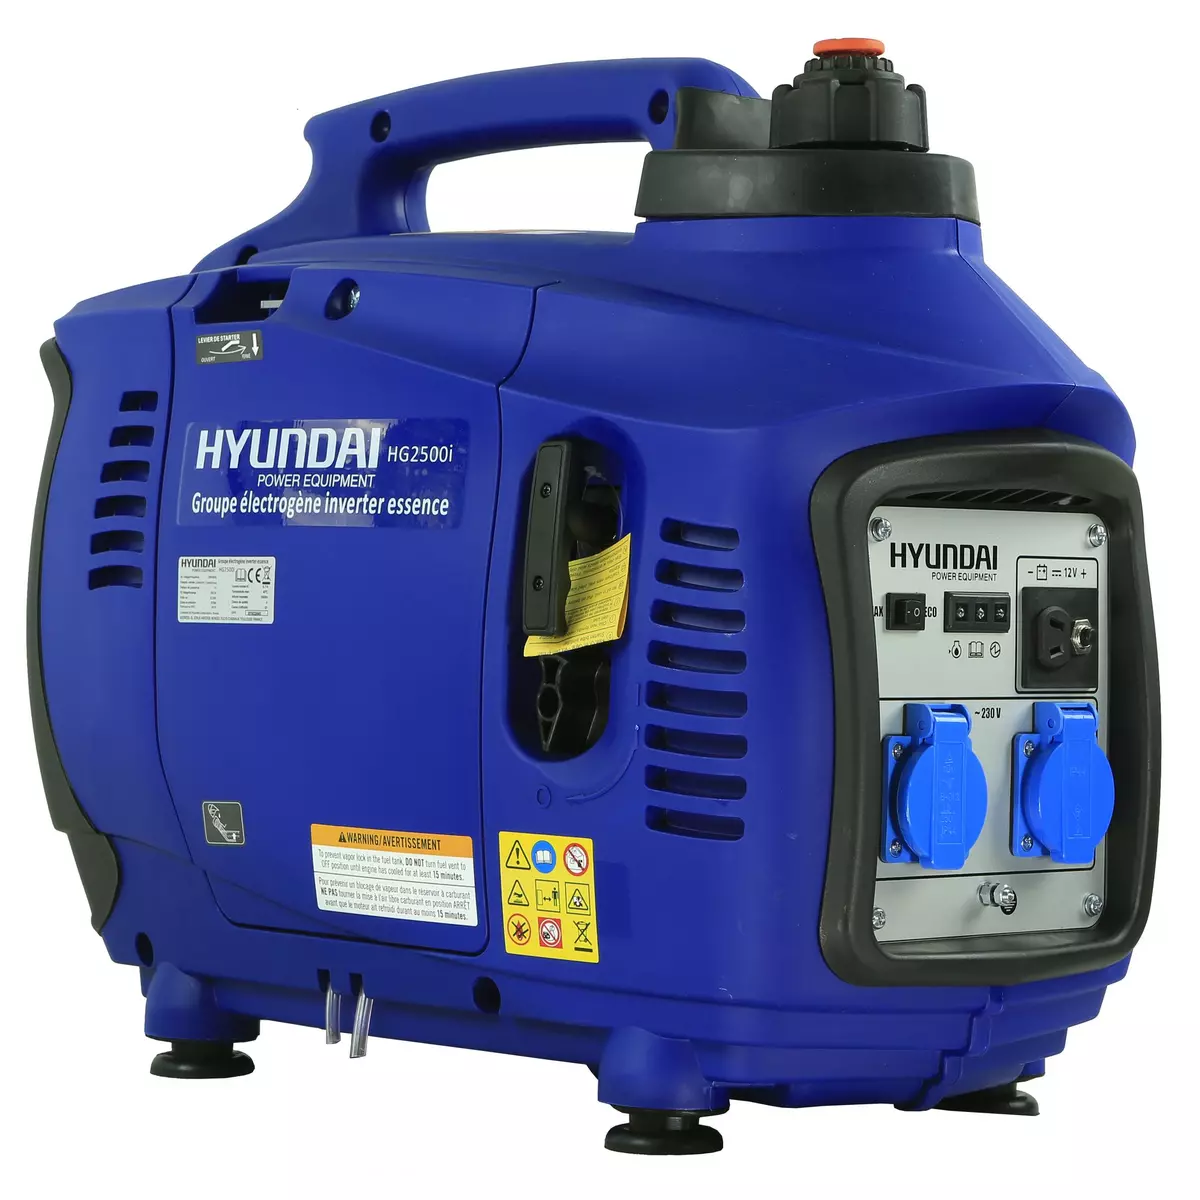 HYUNDAI Groupe électrogène Inverter HG2500I - 2000W